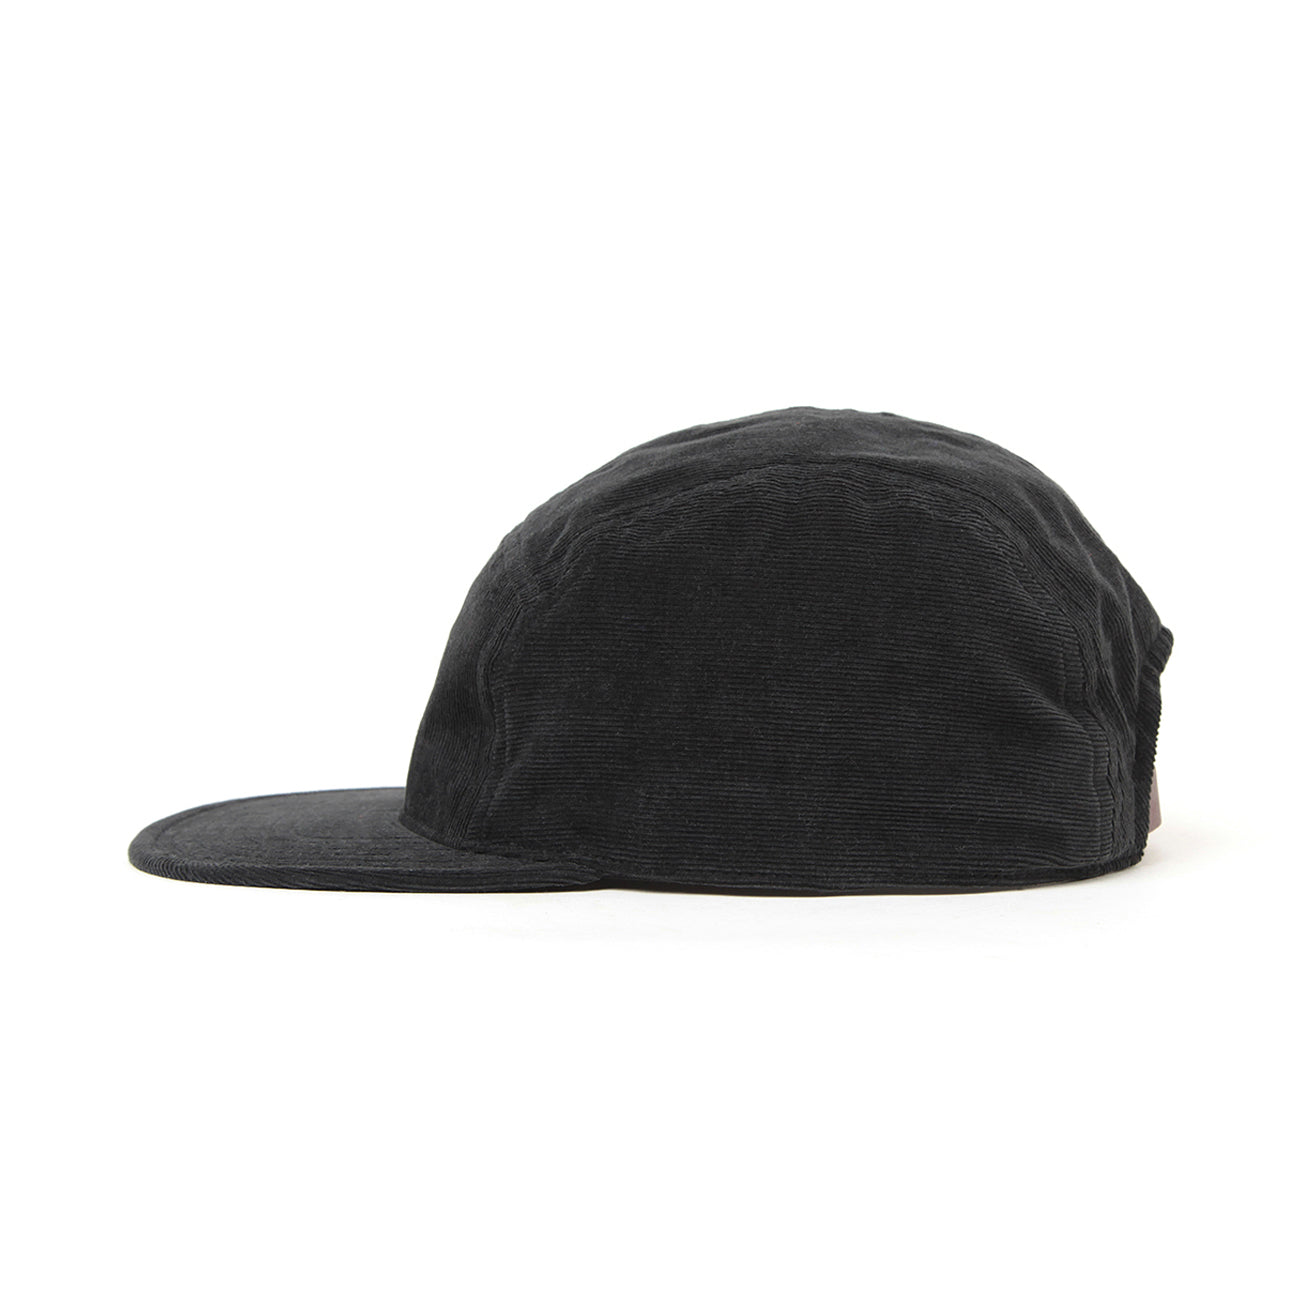 KSK CAP (CORDUROY) - BLACK